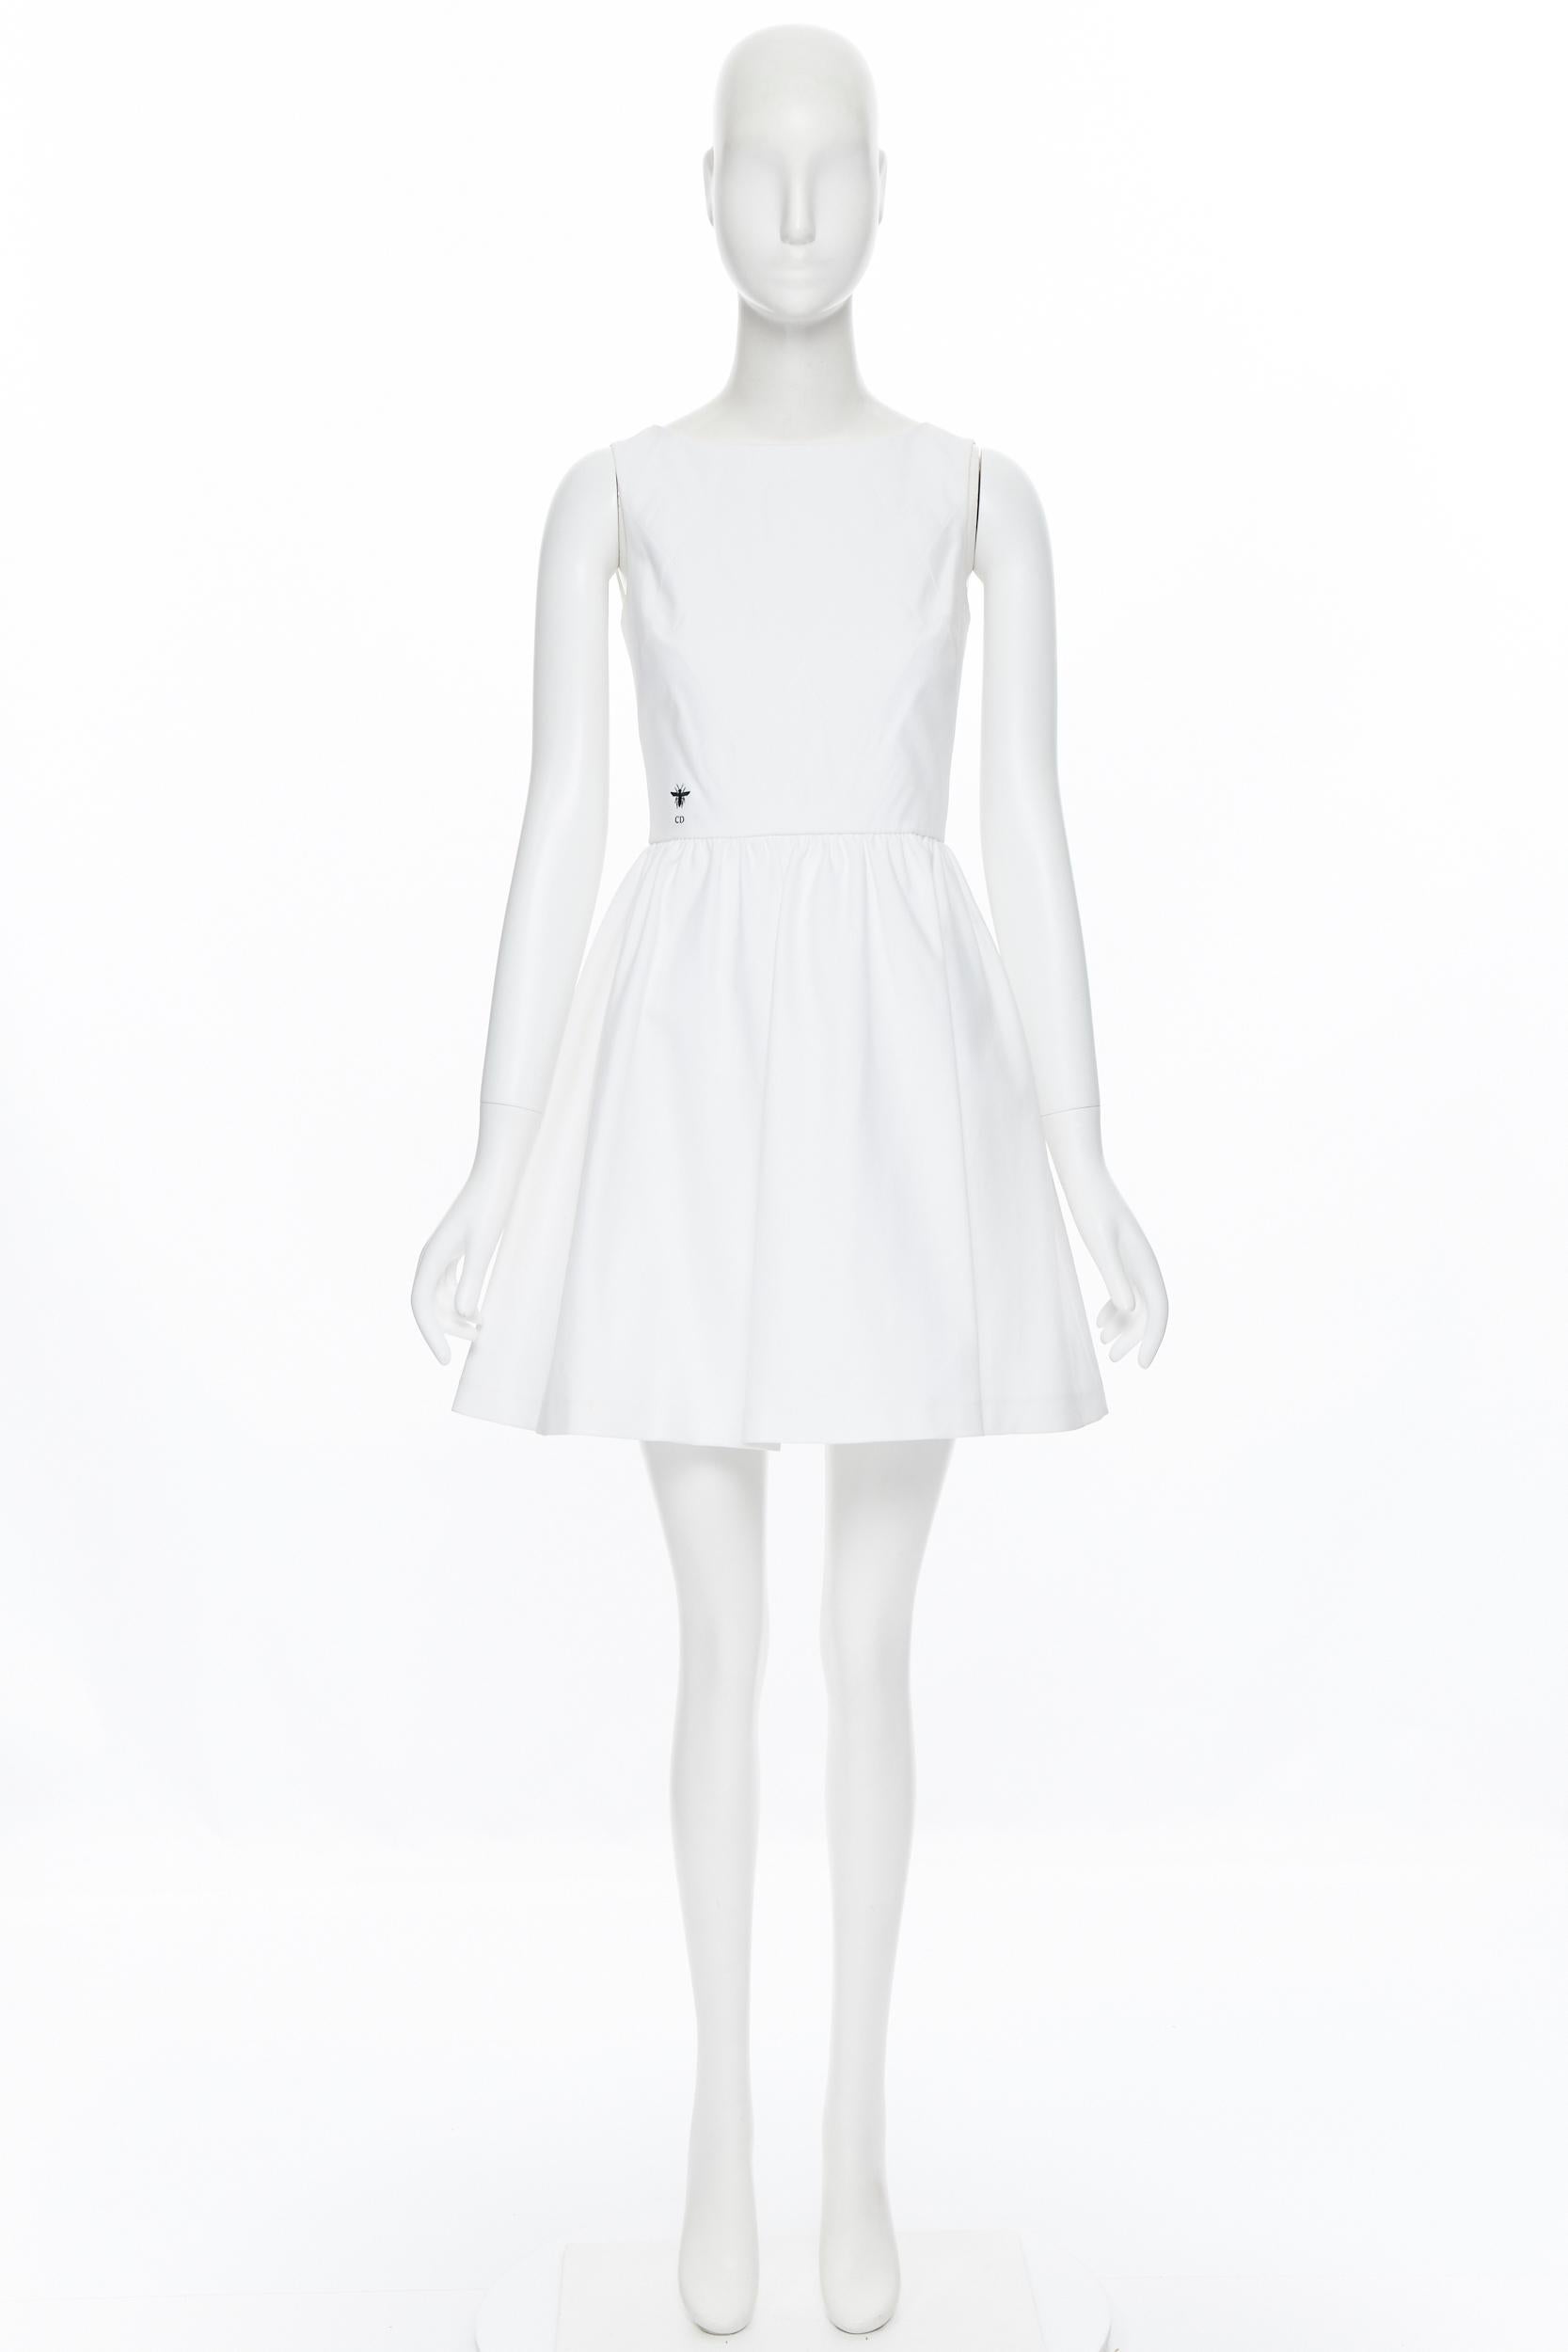 christian dior dress white